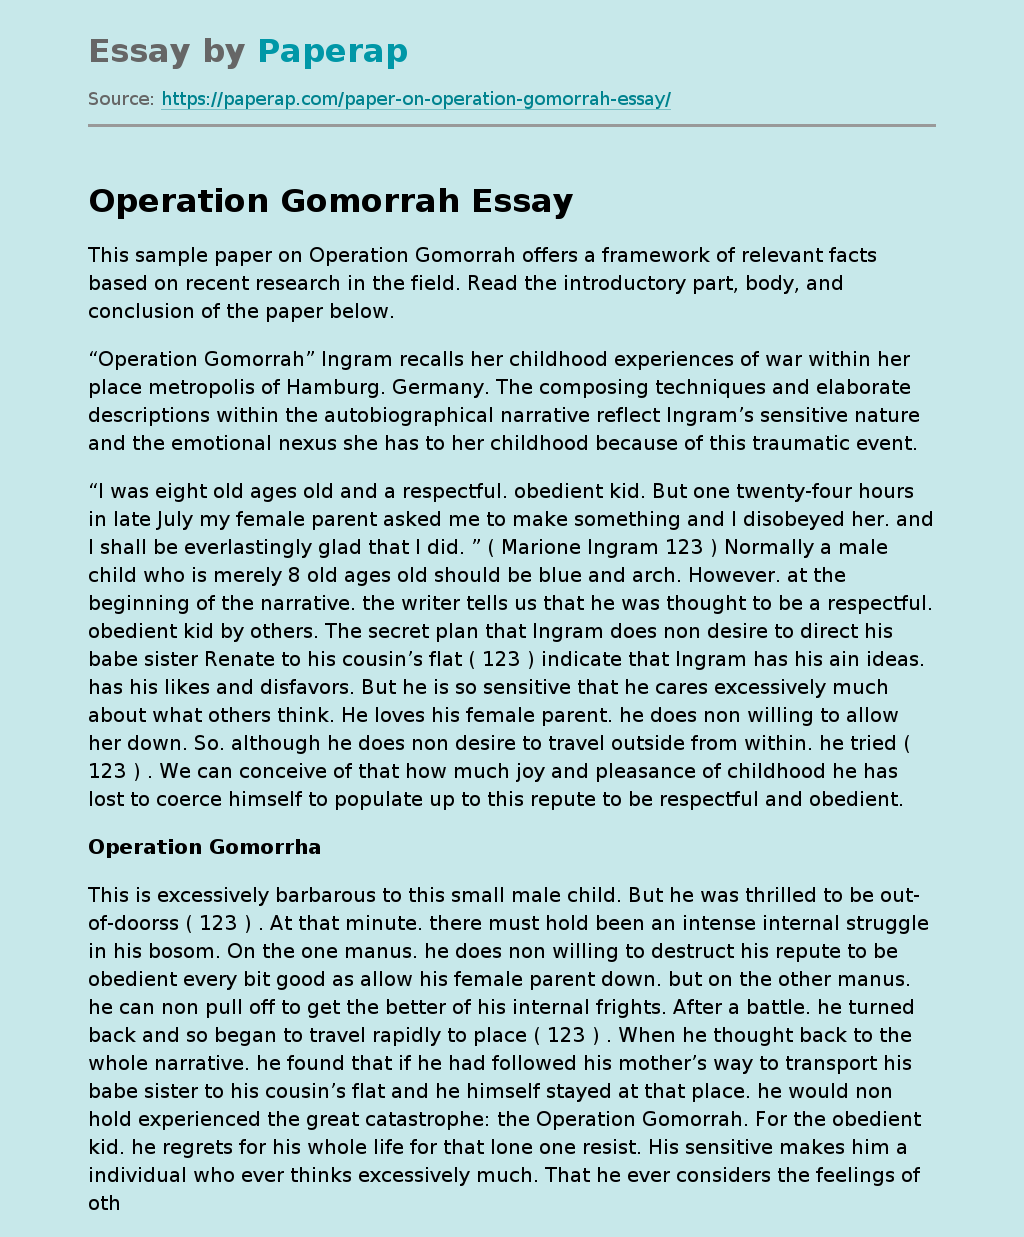 Sample Paper on Operation Gomorrah